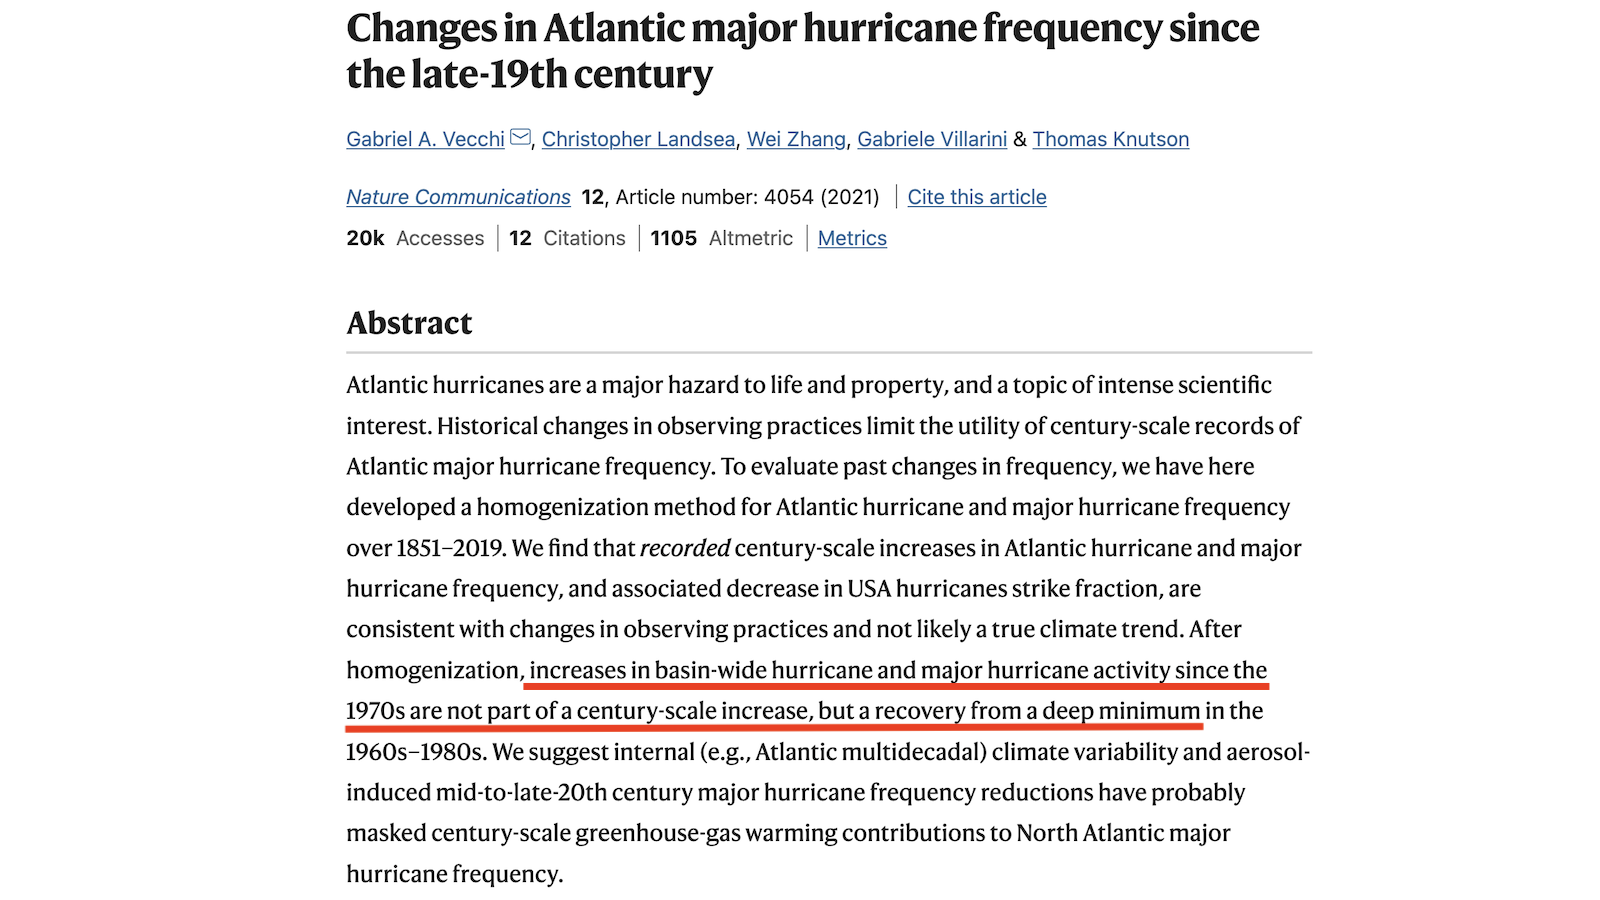 Nature CC on hurricanes